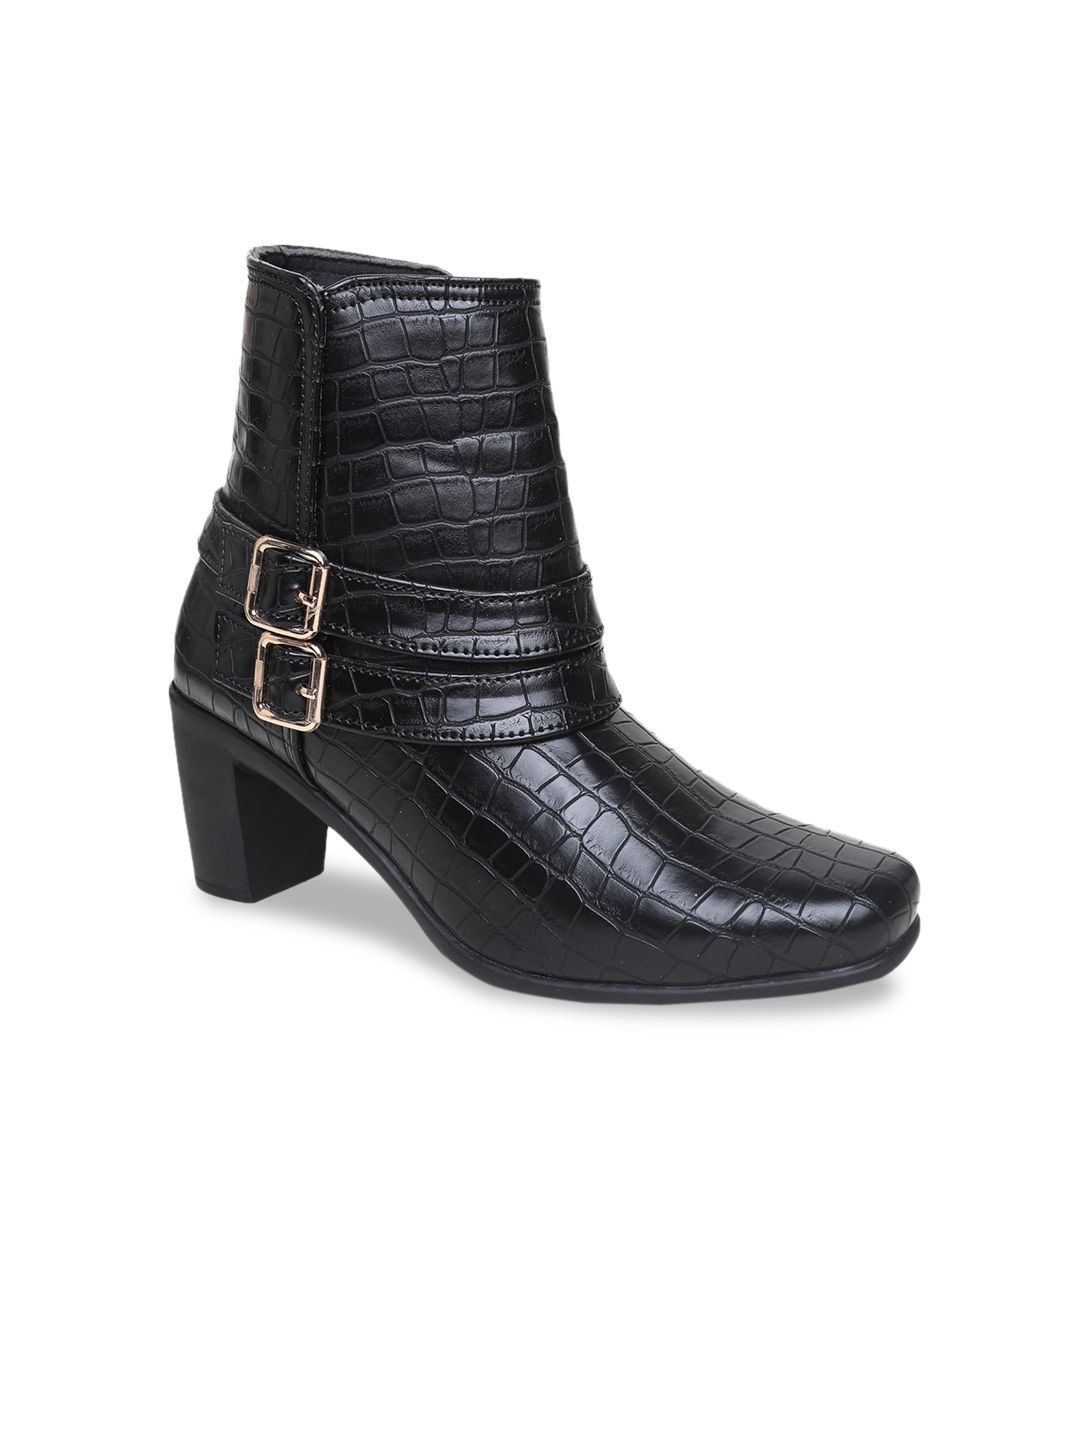 VALIOSAA Black Textured Block Heeled Boots Price in India